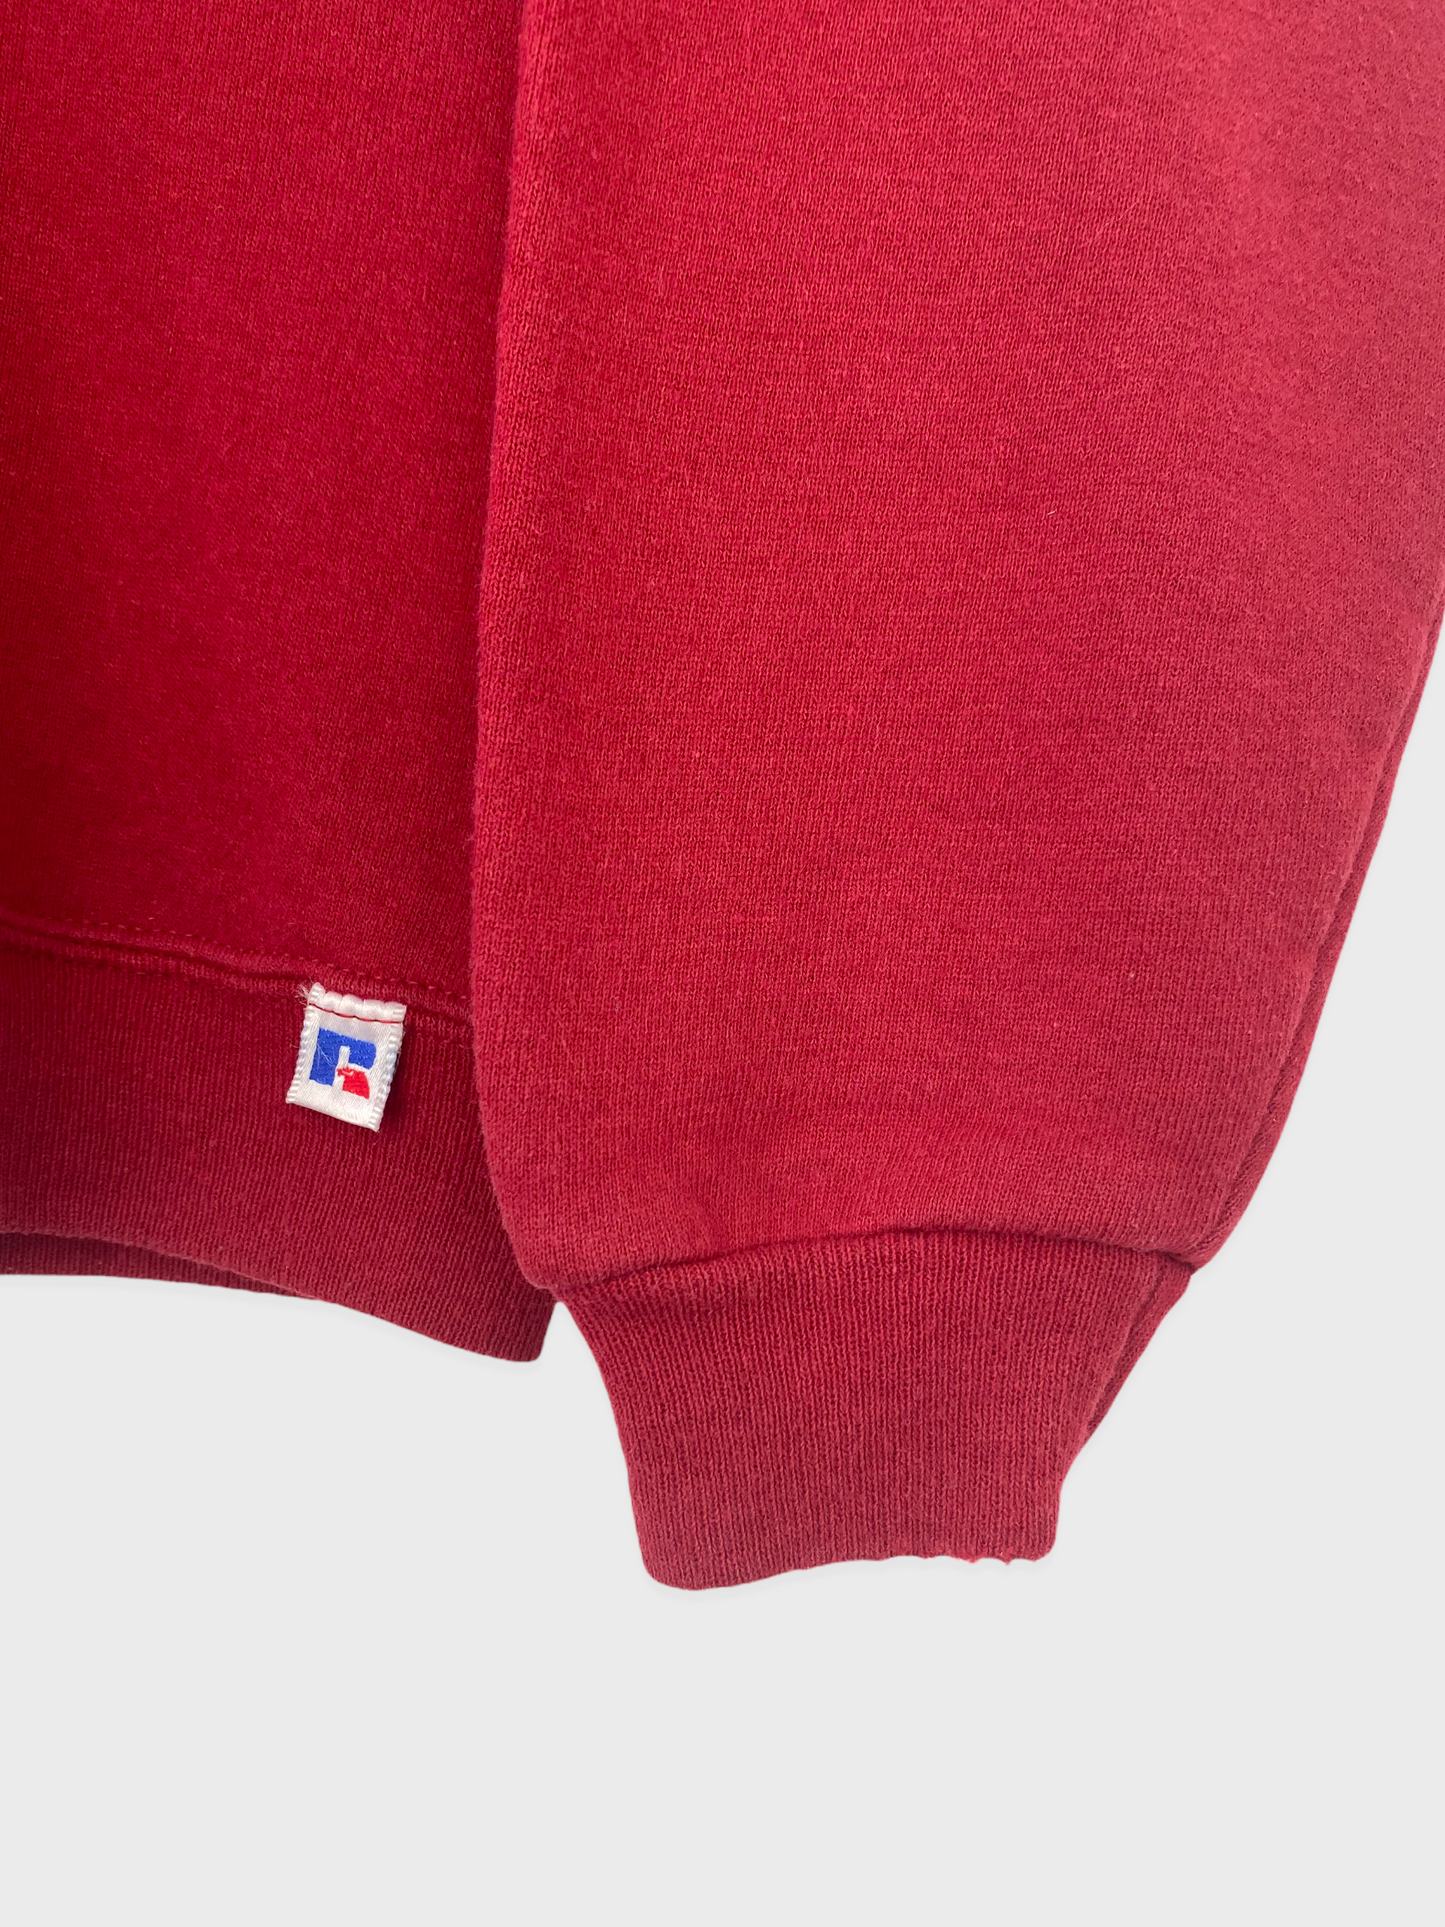 1995 San Francisco 49ers NFL Sweatshirt Size 6